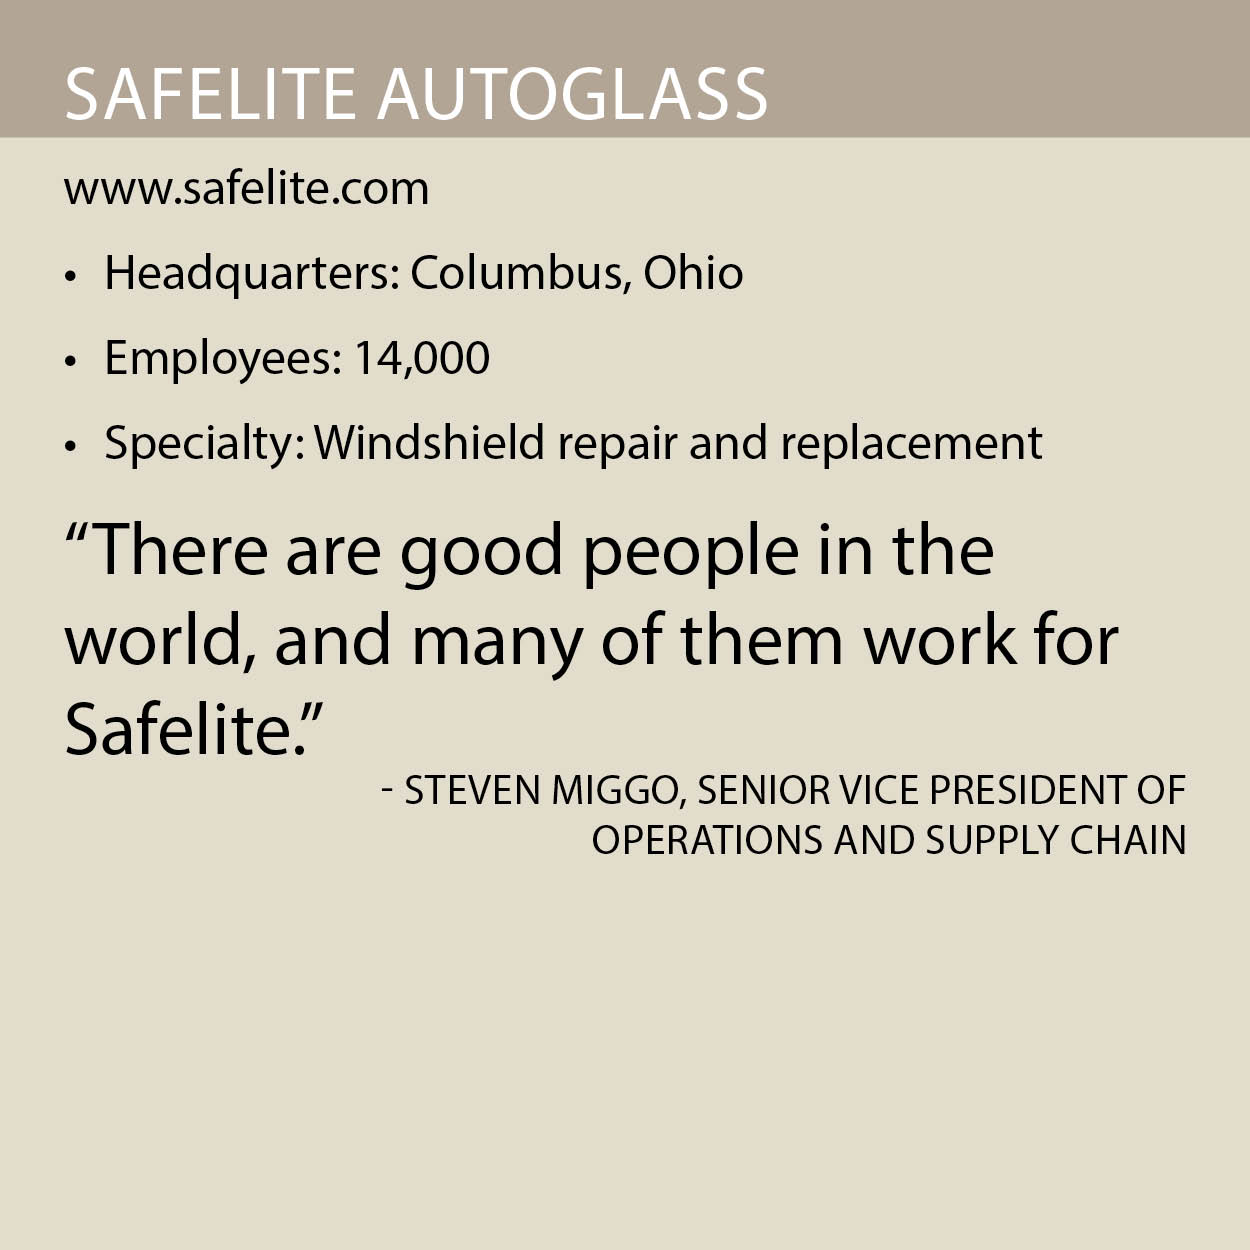 Safelite Autoglass info